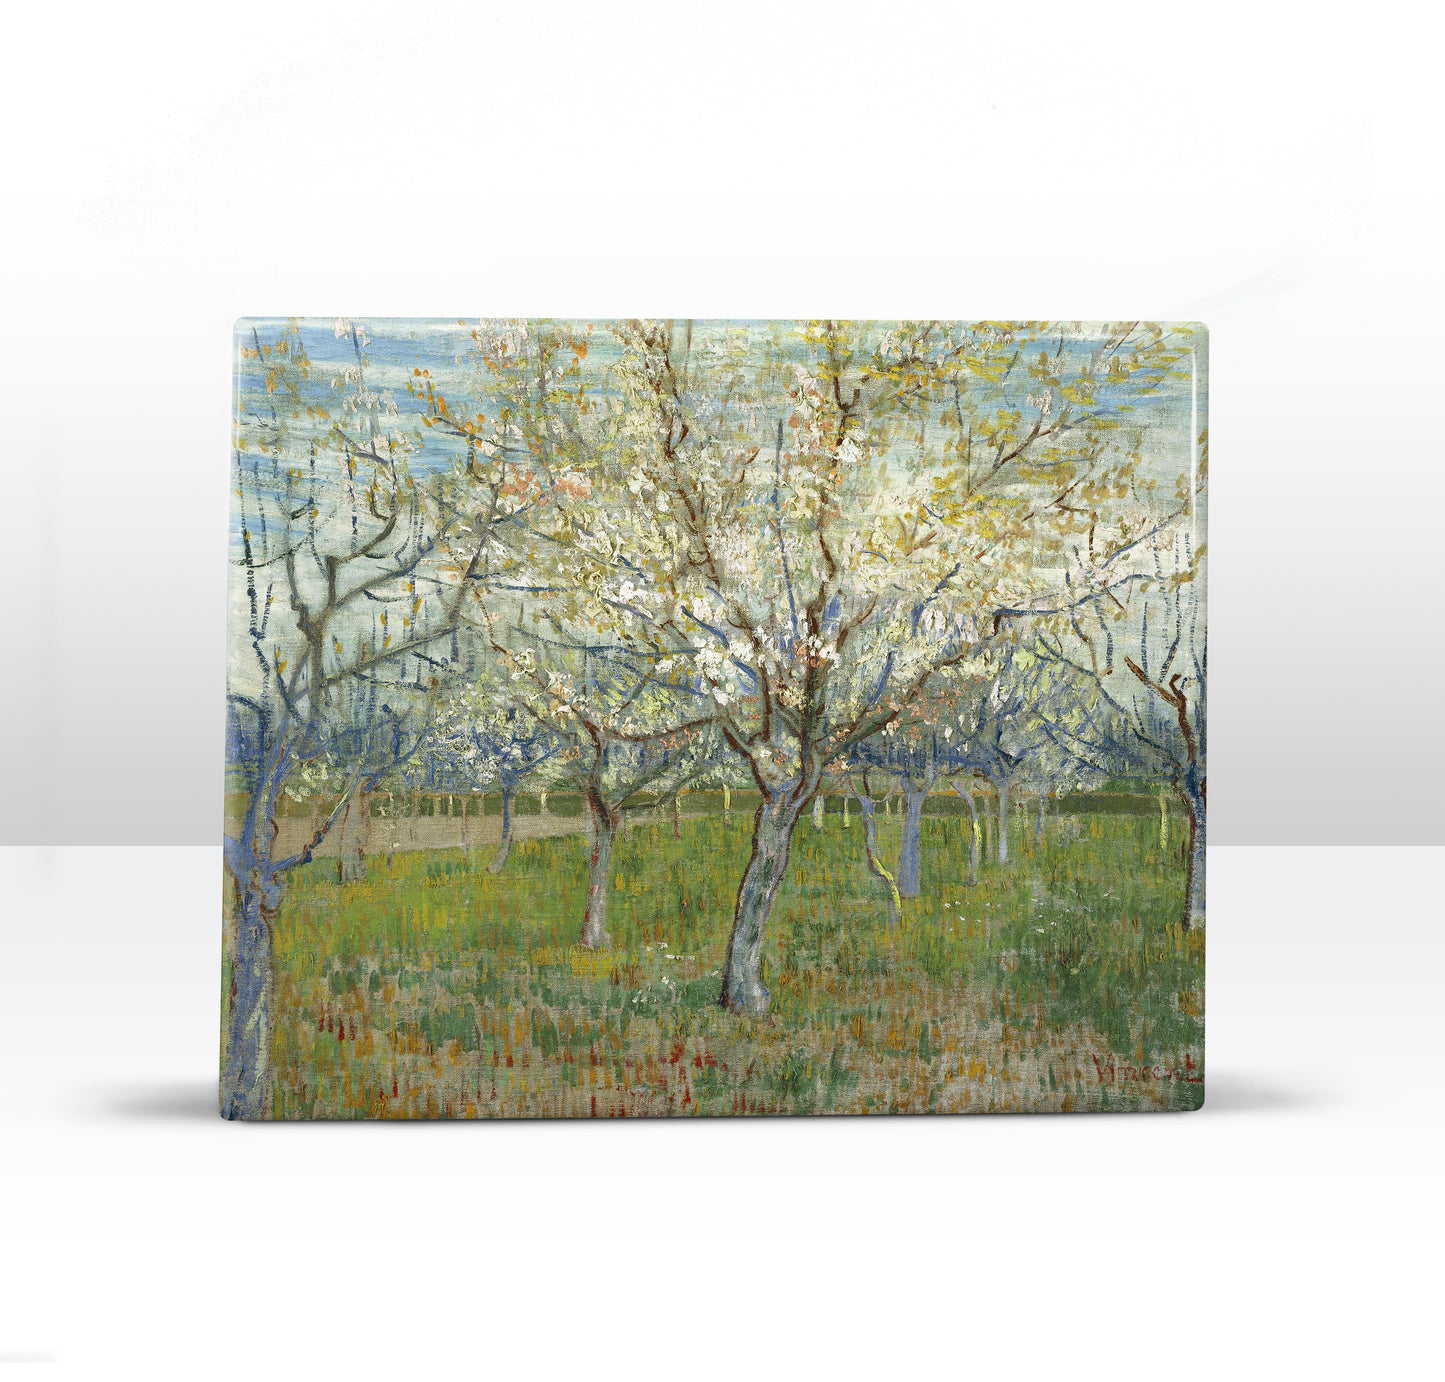 Laque print - The pink orchard - Vincent van Gogh - 24x 19.5 cm - LP211